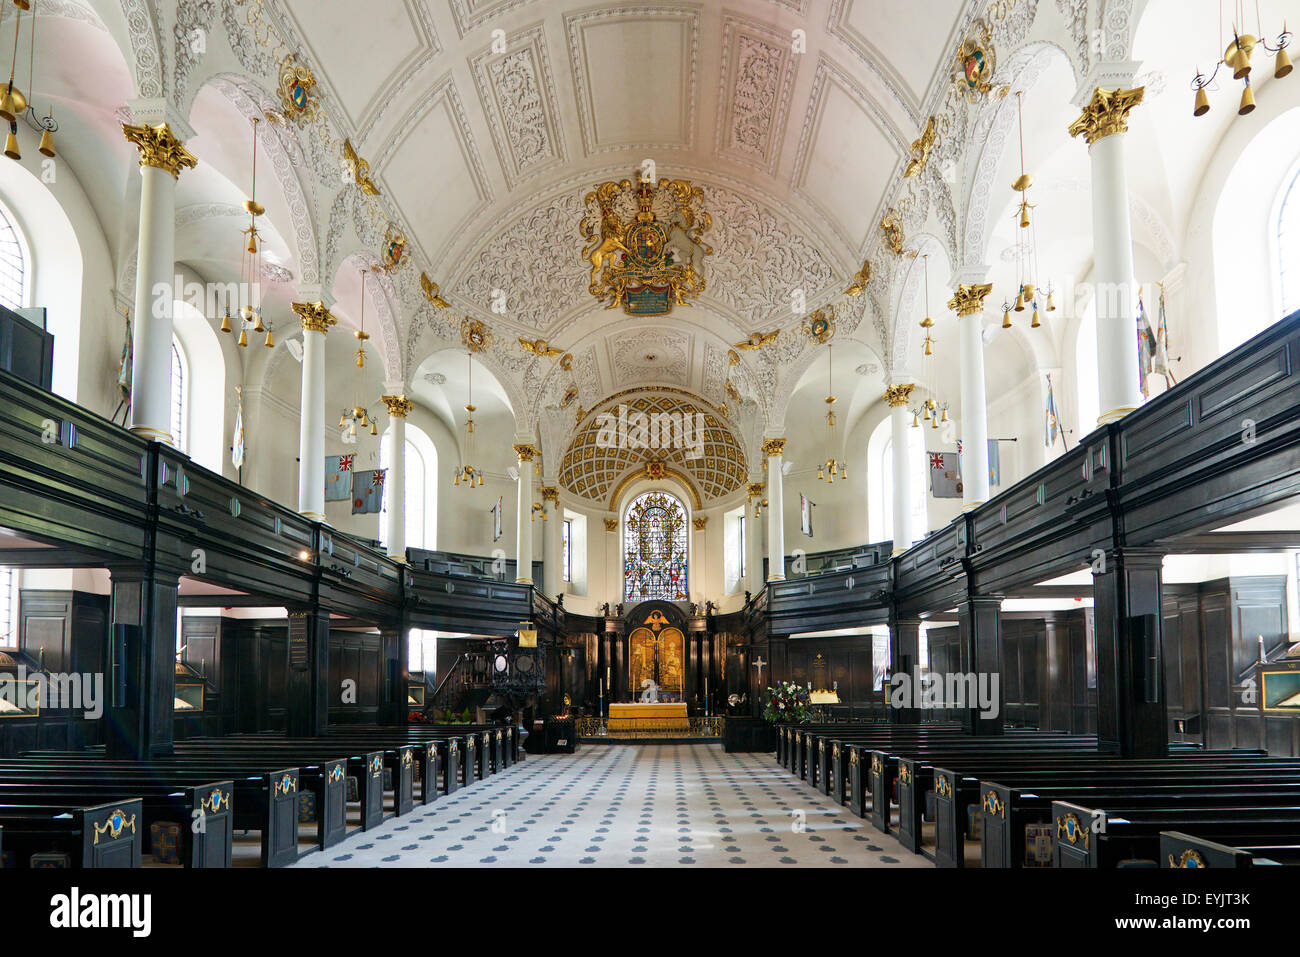 Interior Saint Clemenr Danes Church Strand London England Stock Photo